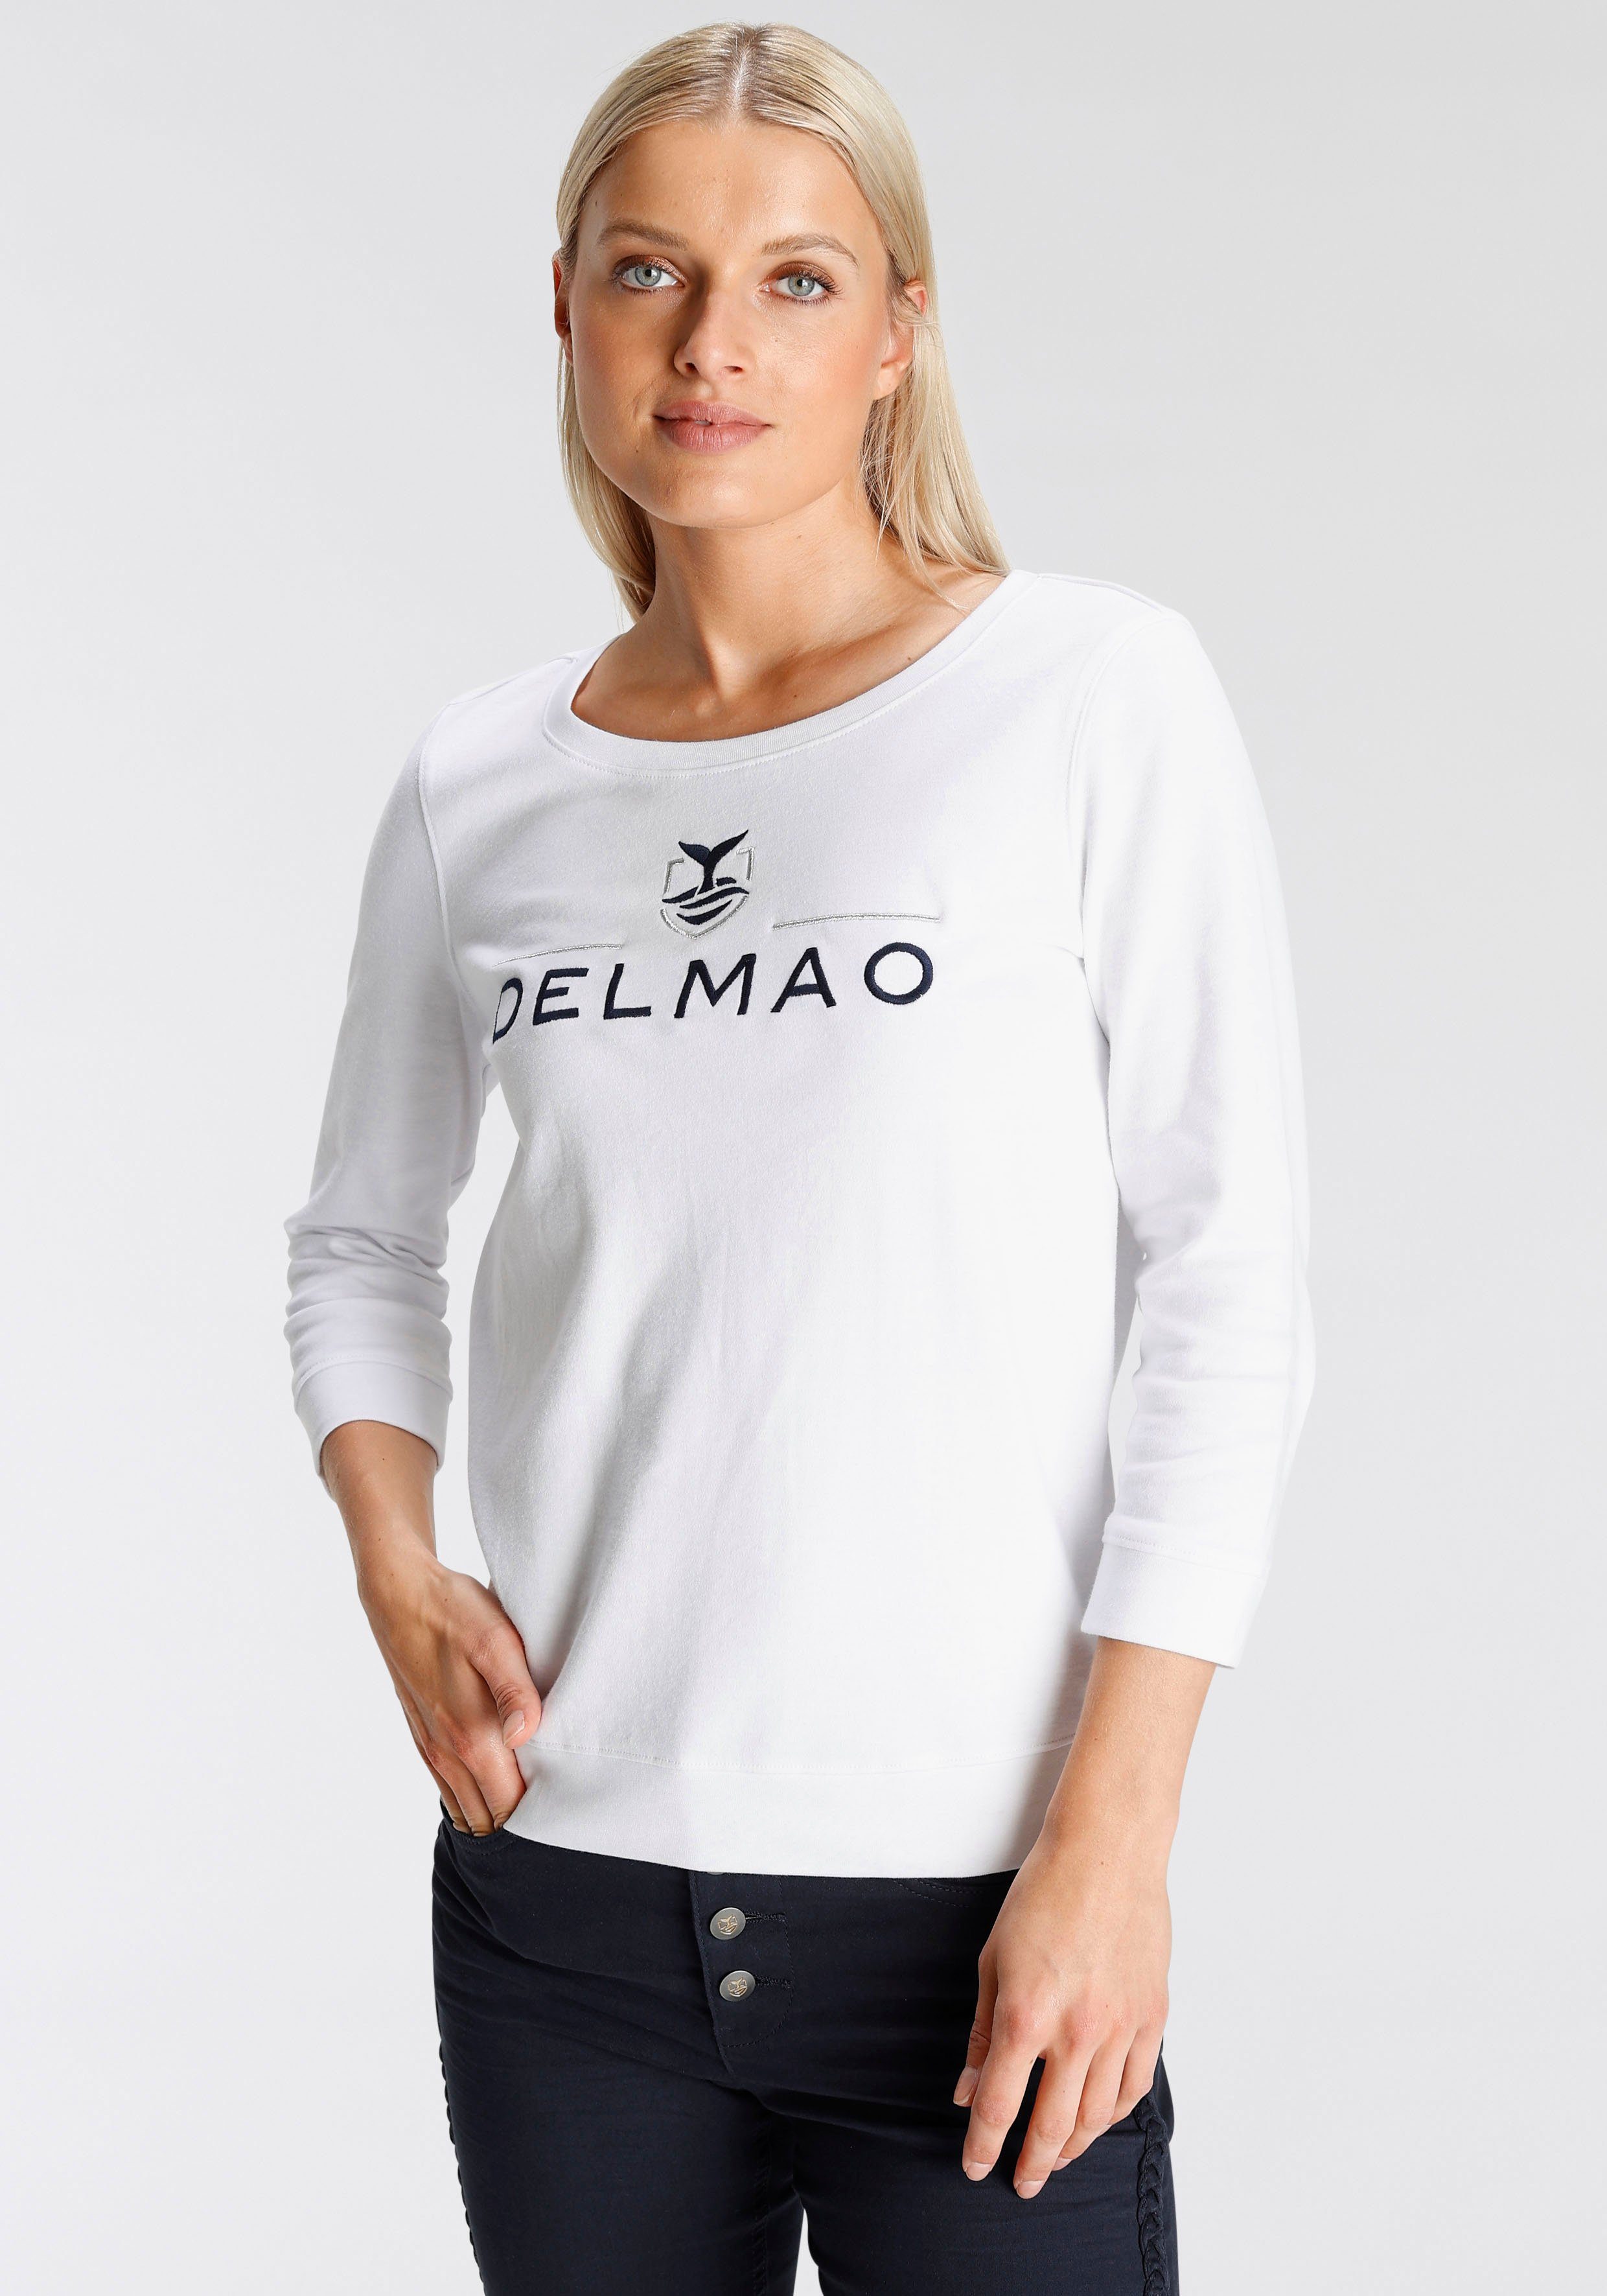 DELMAO Sweatshirt NEUE MARKE